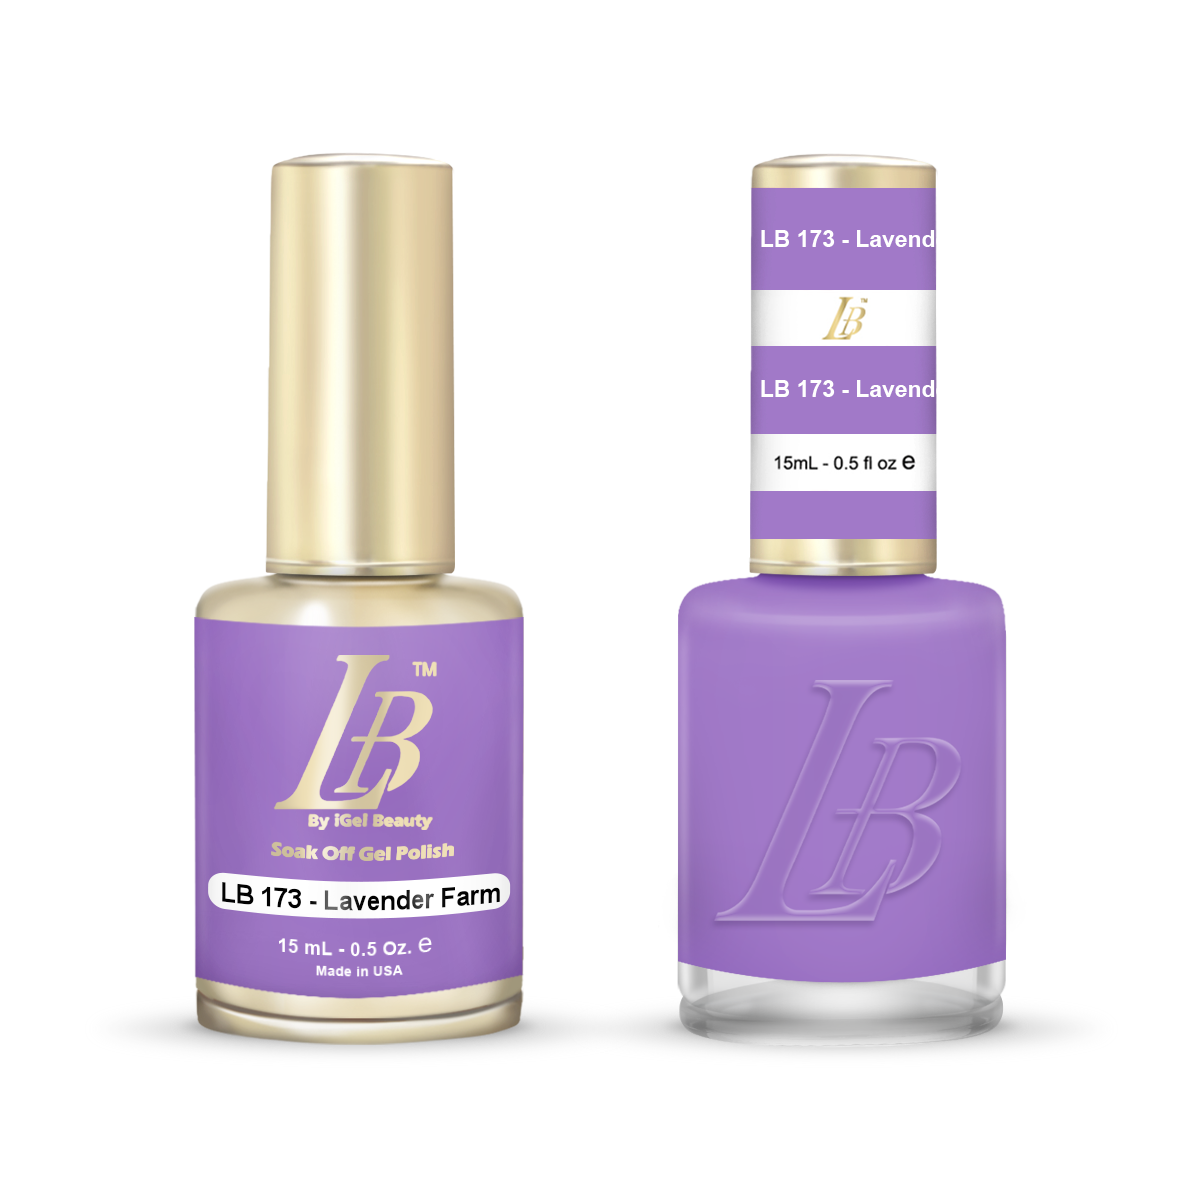 LB Duo - LB173 Lavender Farm